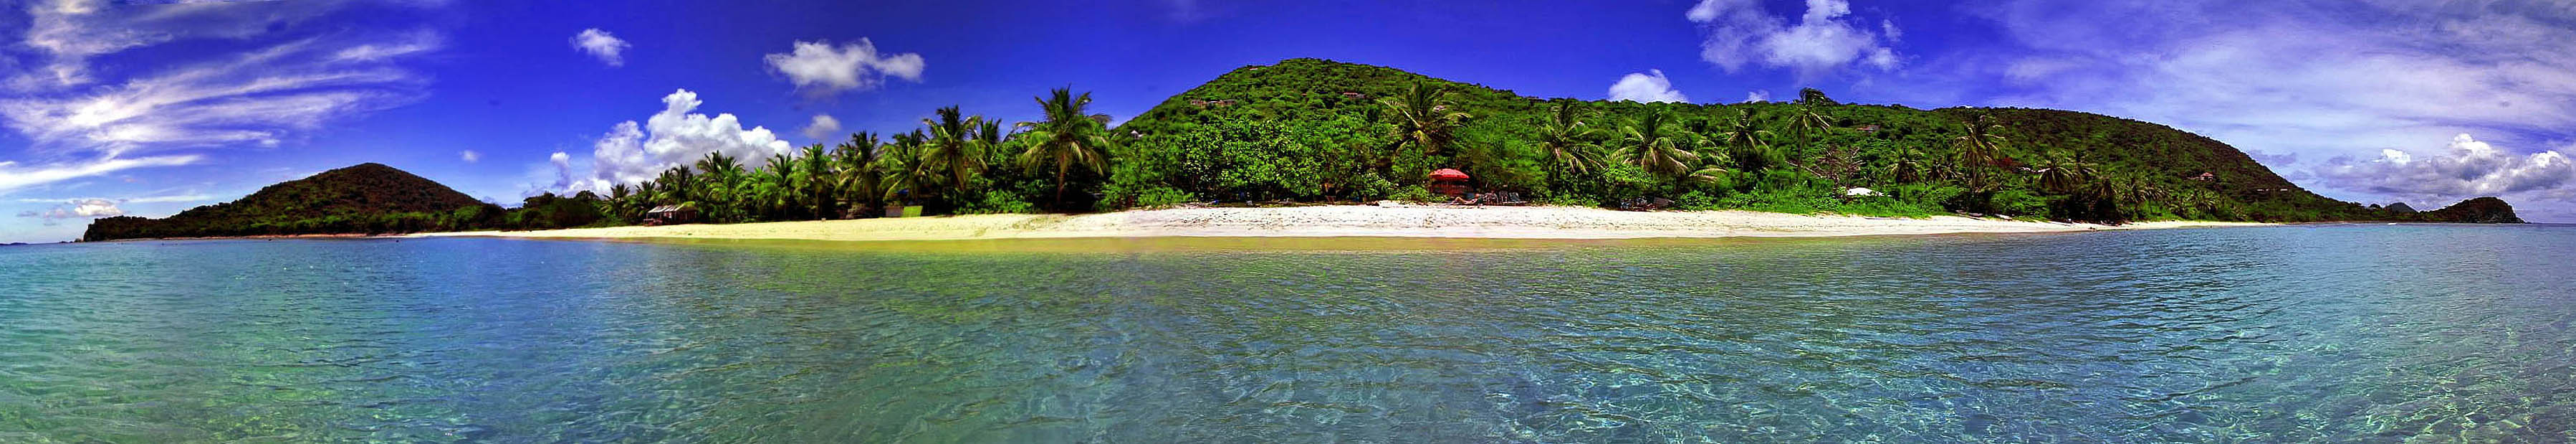 Panorama of Smuggler's Cove, Tortola